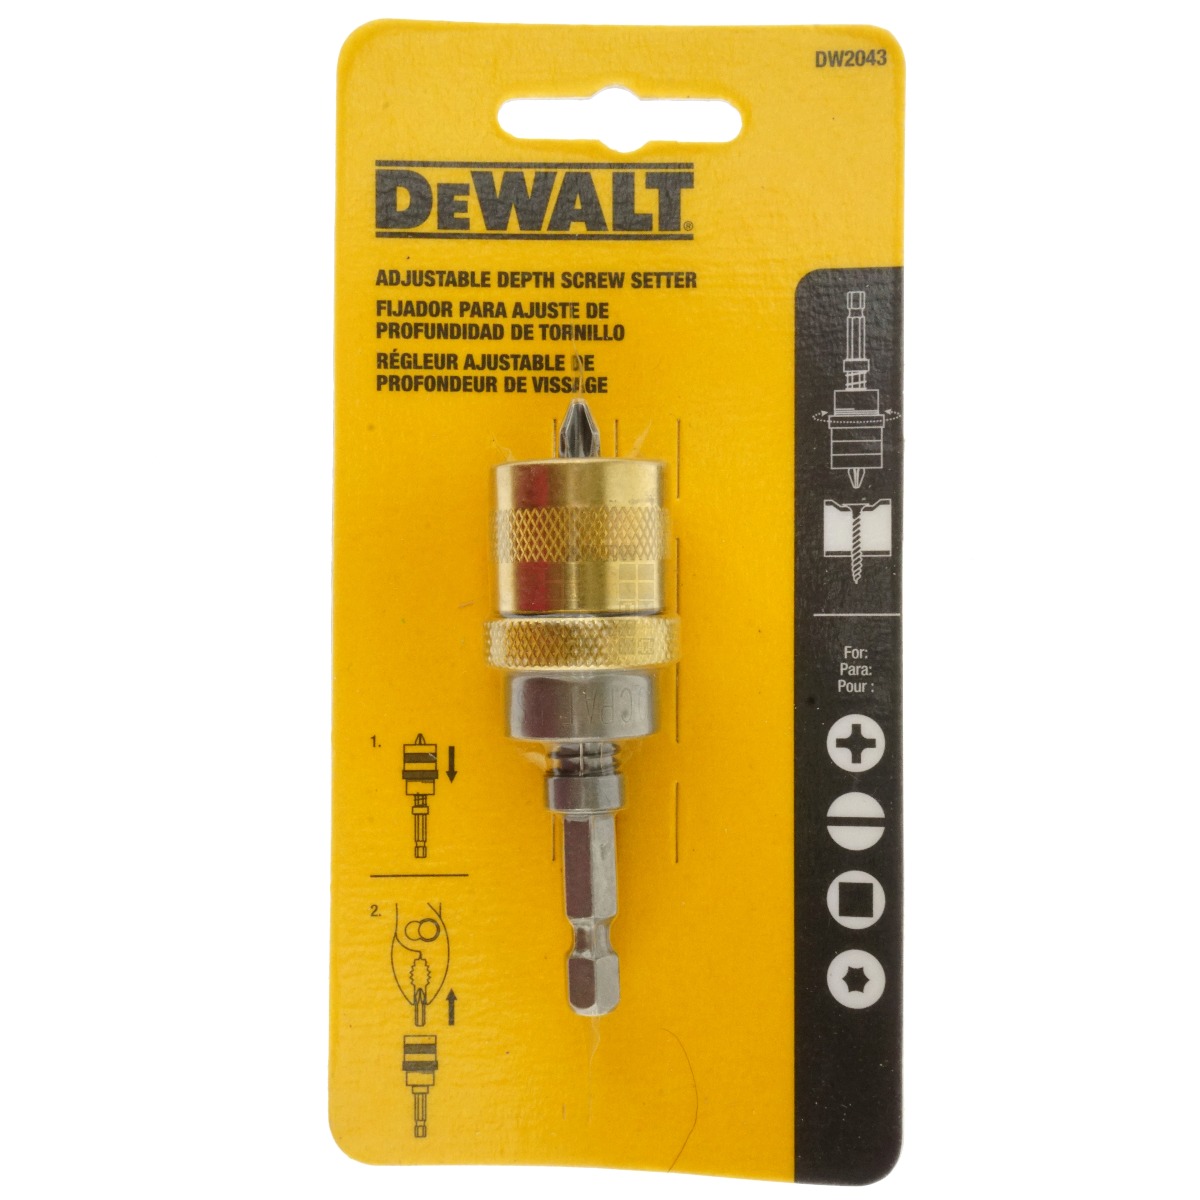 Dewalt DW2043 Adjustable Depth Screw Setter